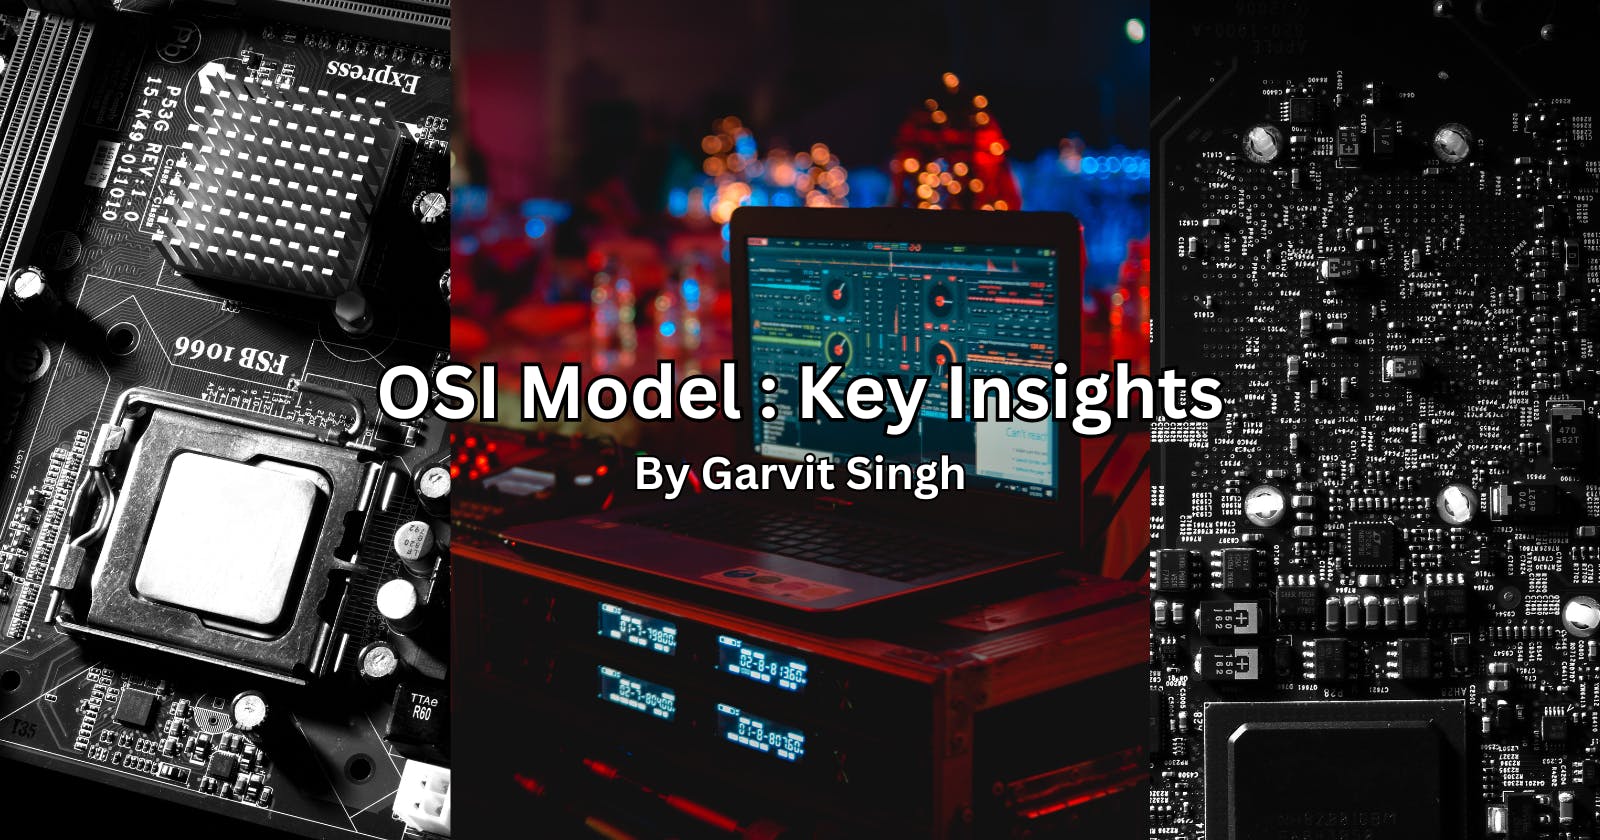 The OSI Model : Key Insights